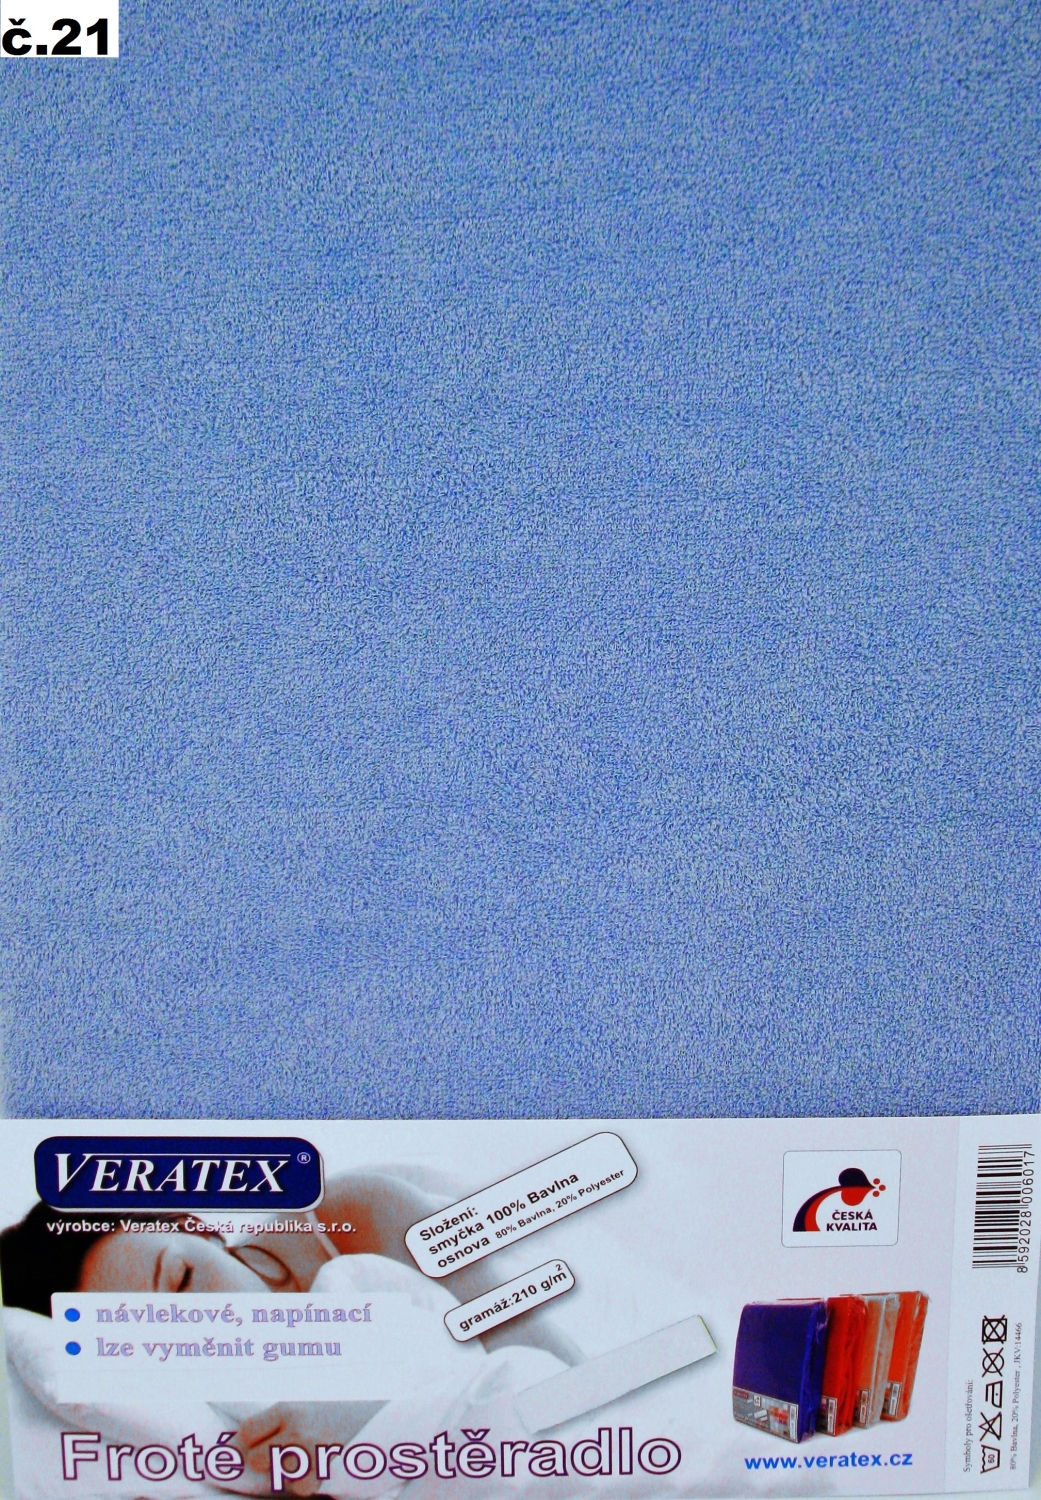 Veratex Froté prostěradlo 200x200/16cm (č.21-sv.modrá)